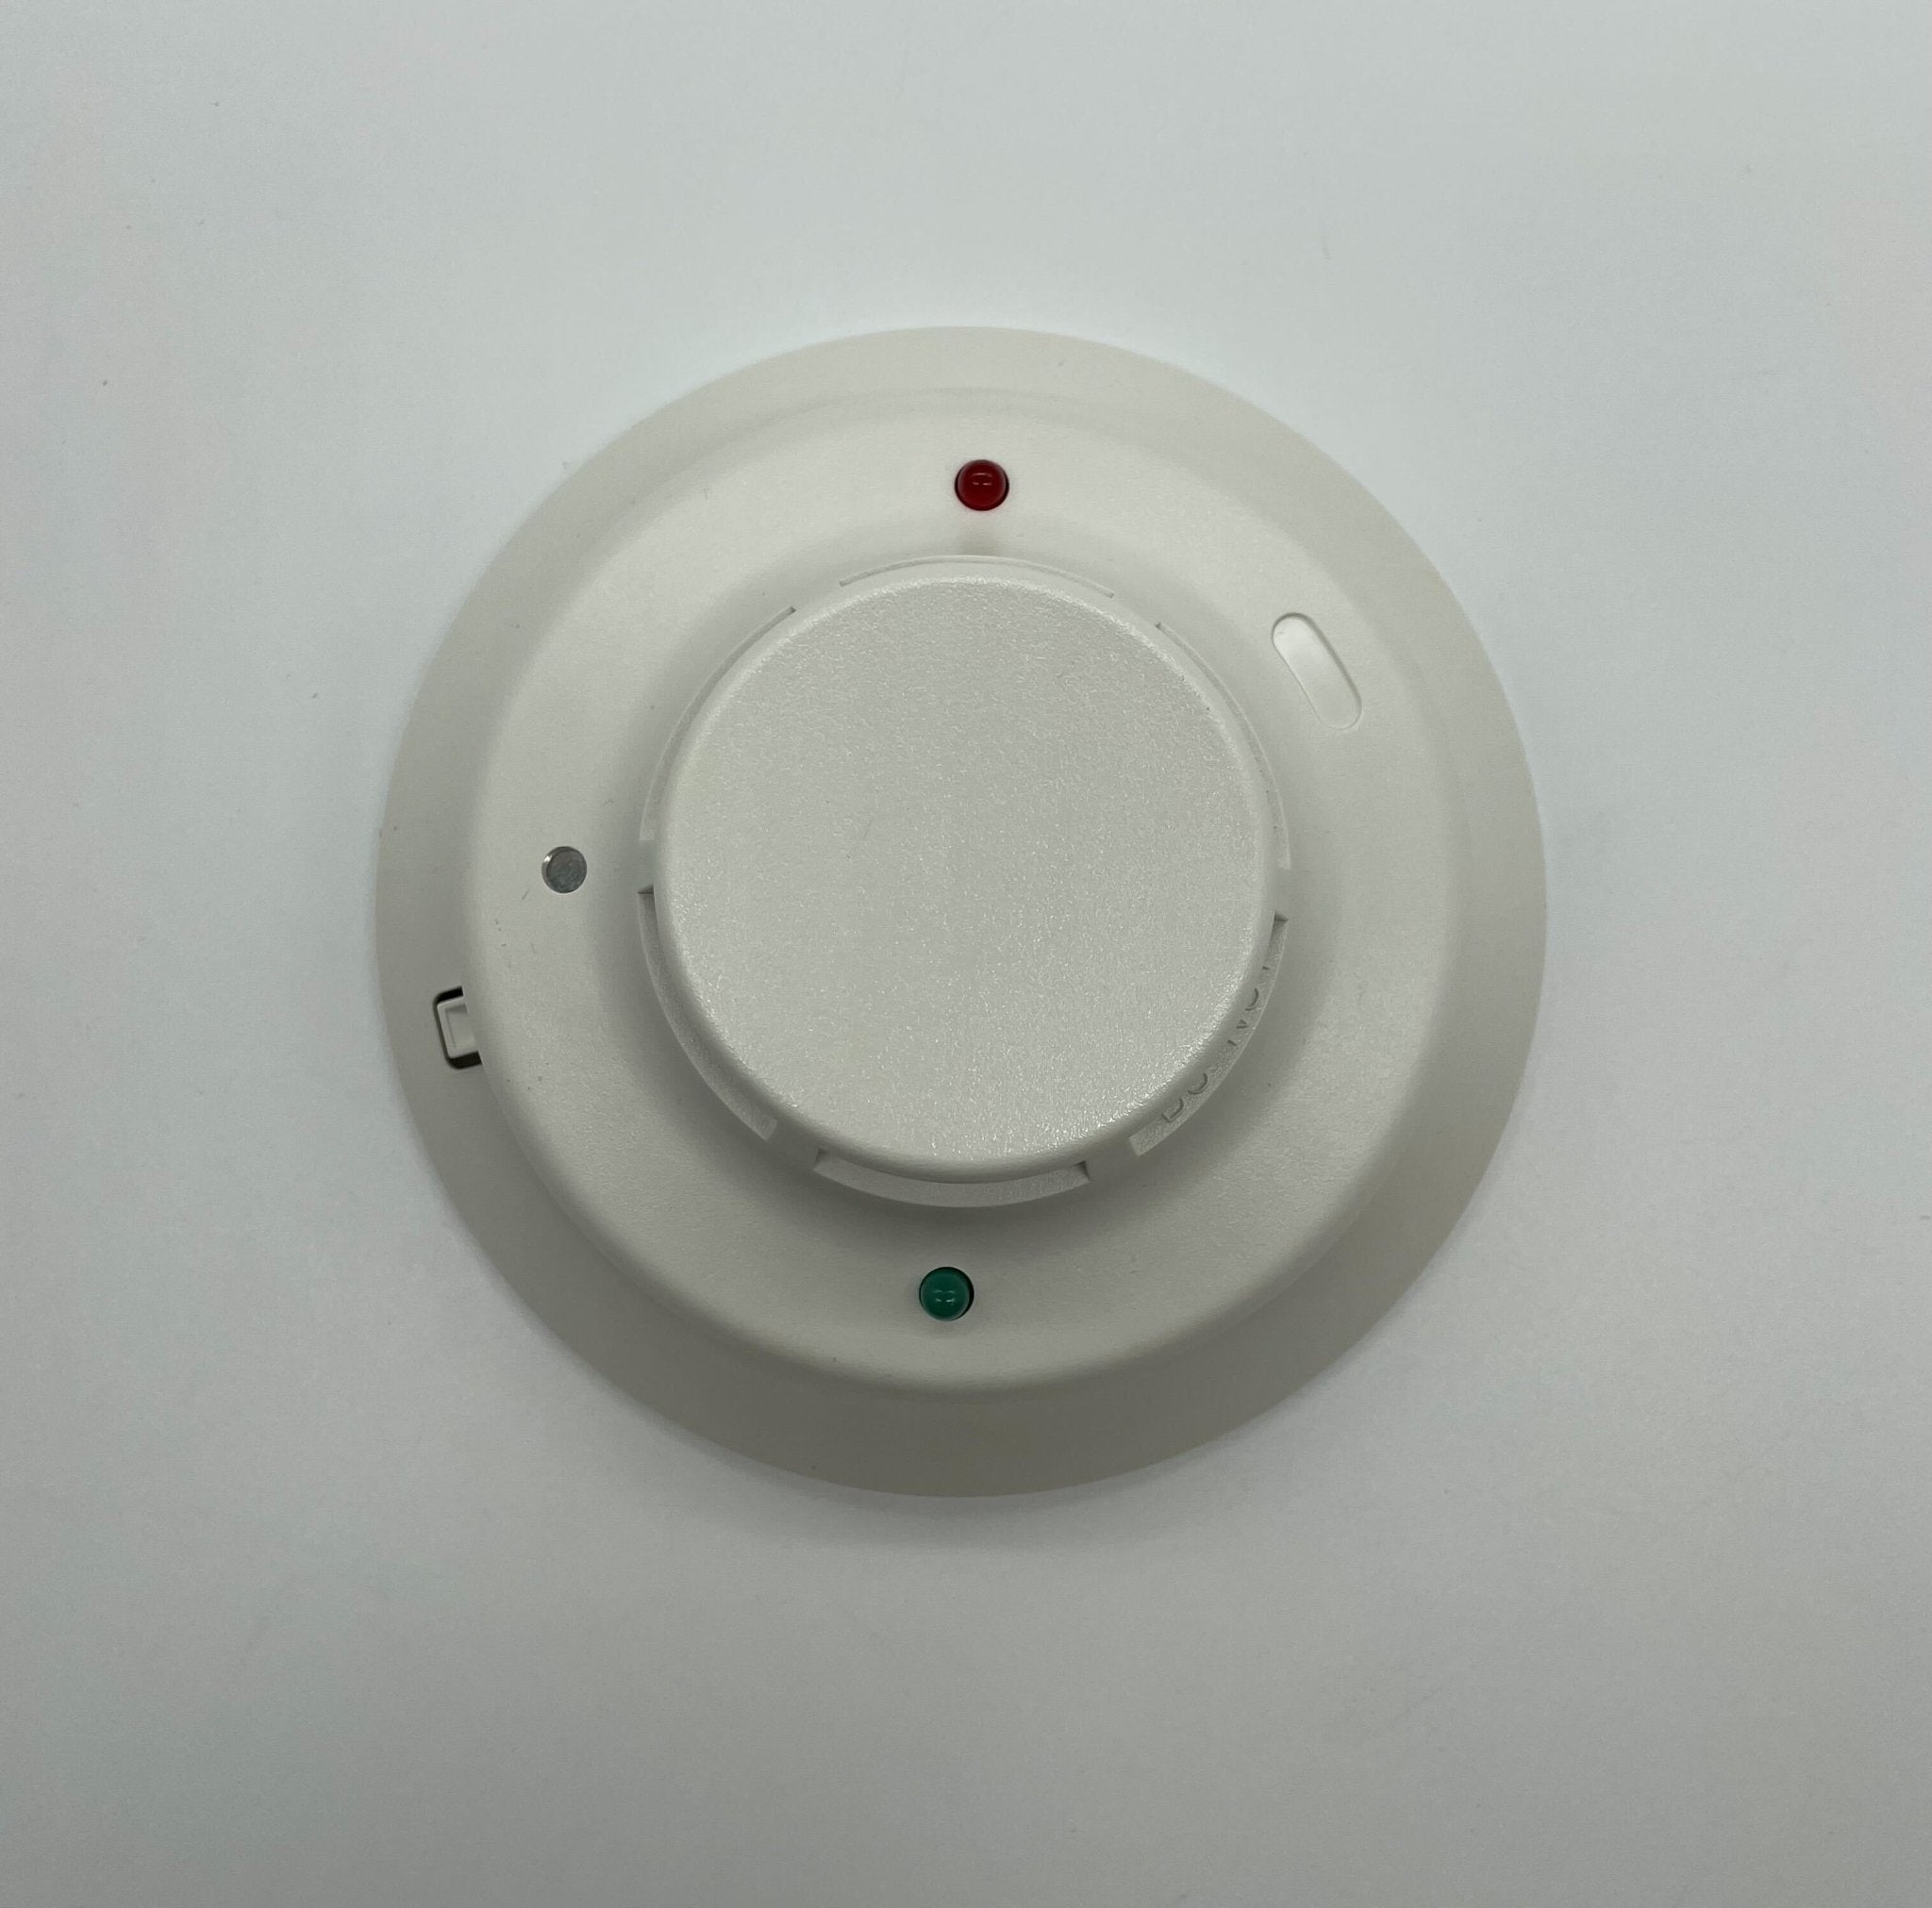 System Sensor 4W-B - The Fire Alarm Supplier